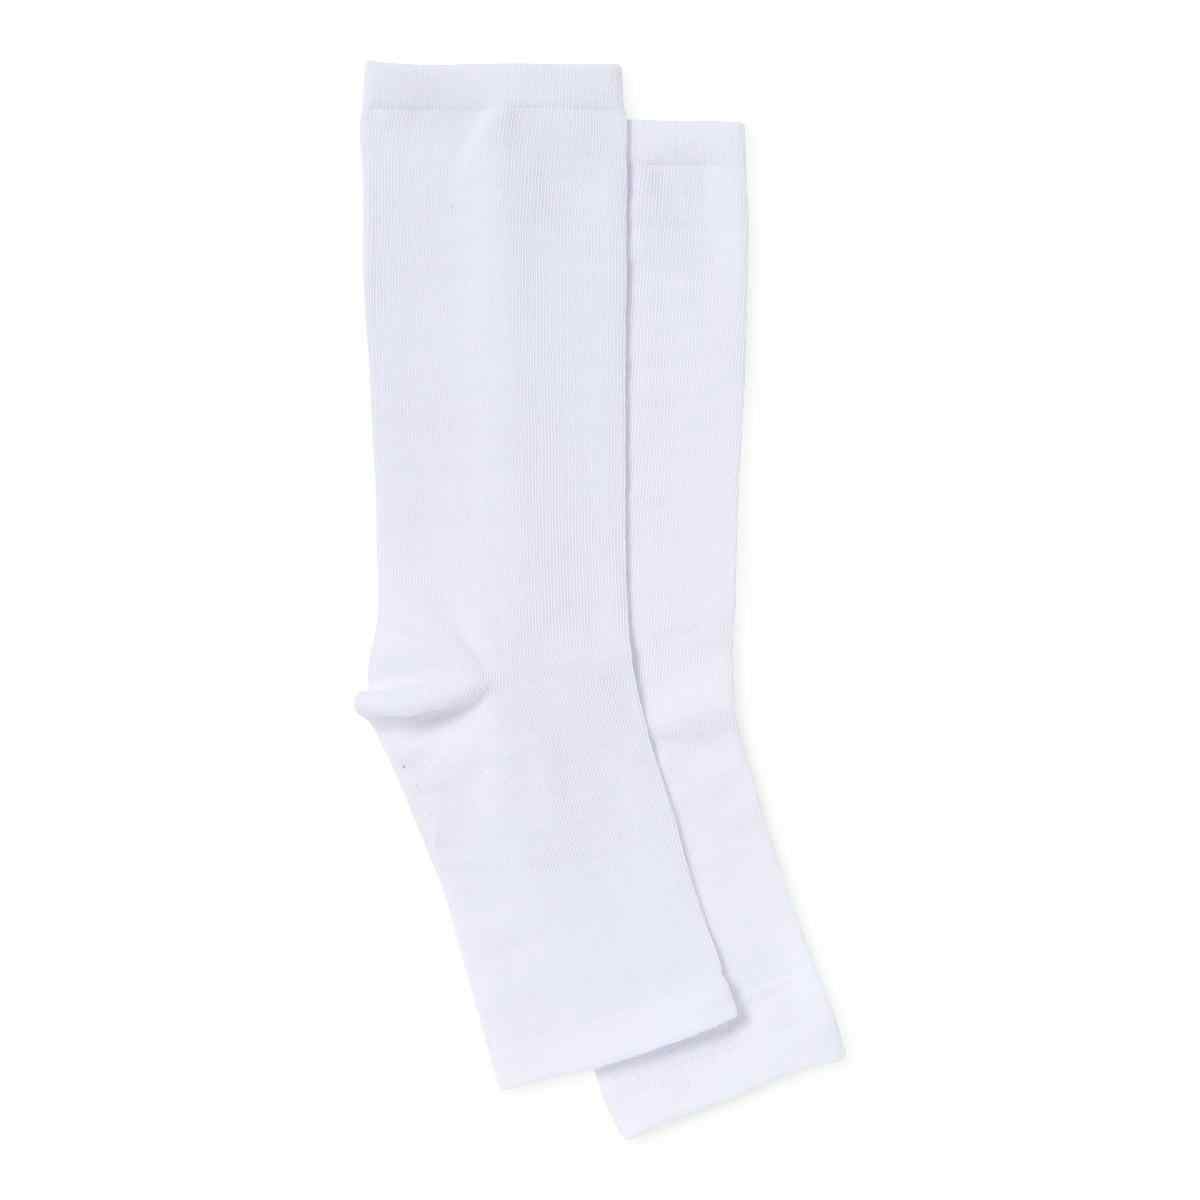 Medline Protective Leg Sleeves, NONSLEEVEL, White (15.0" L, Universal Fit) - 1 Pair